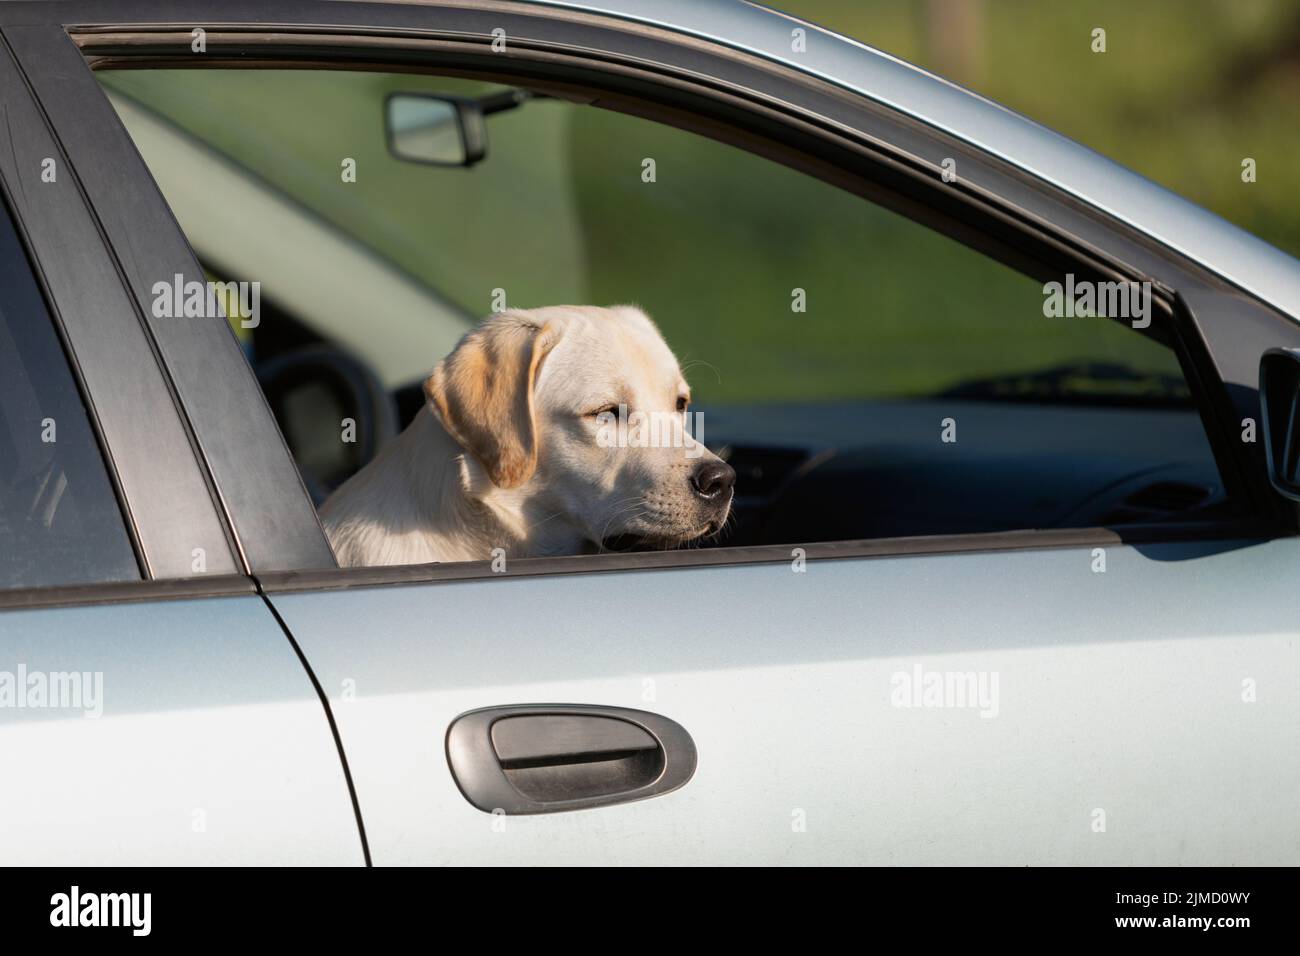 Transport des Hundes im Auto - Labrador Laika